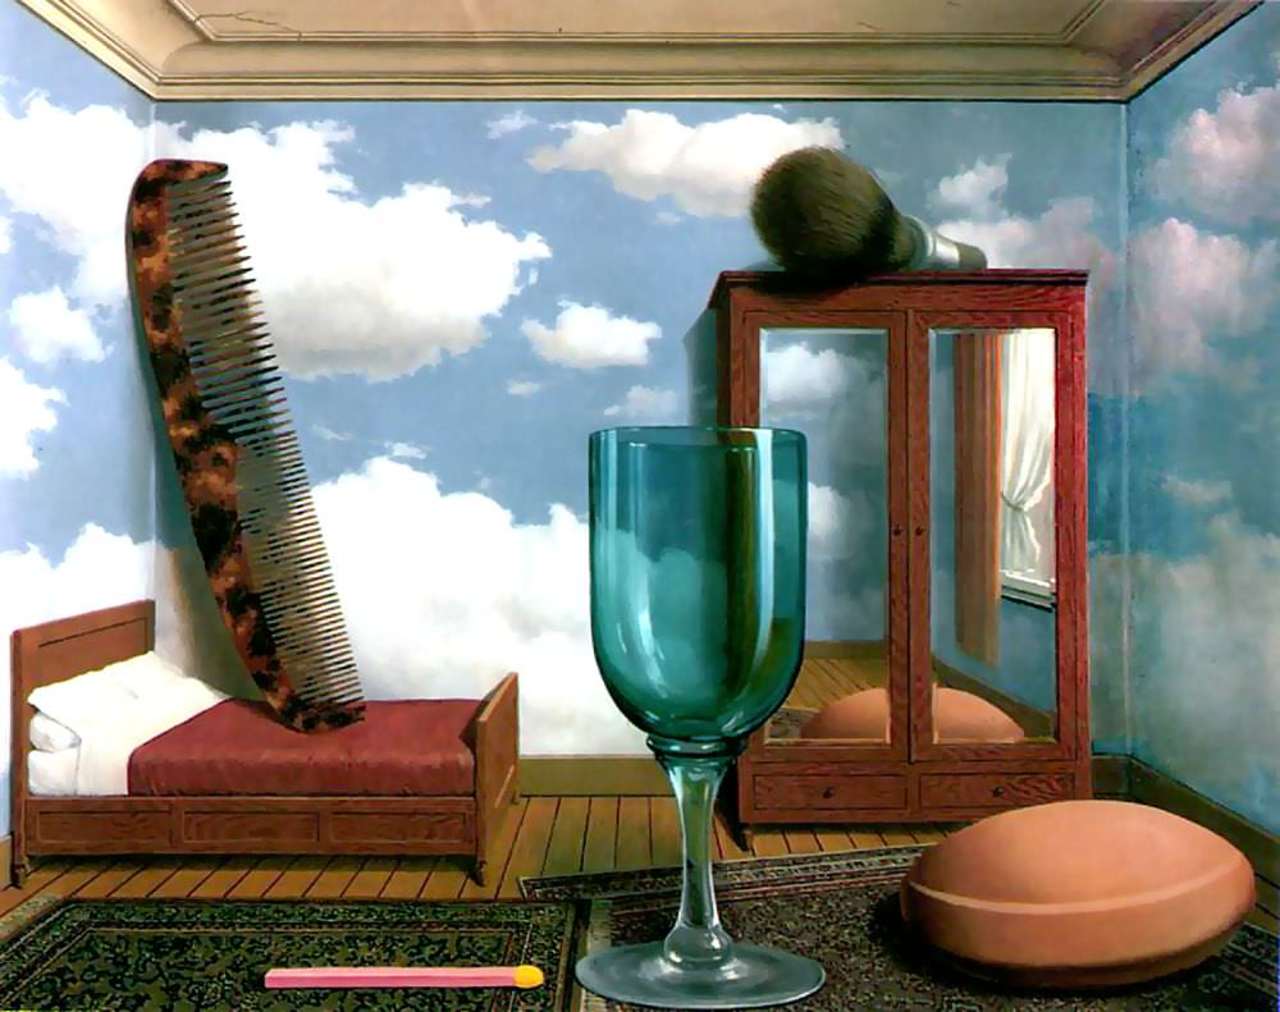 Personal Values, 1952 by Rene Magritte http://mf.tt/h4xrP @GoogleExpertUK #Magritte #art http://t.co/bp1qBcyDF3